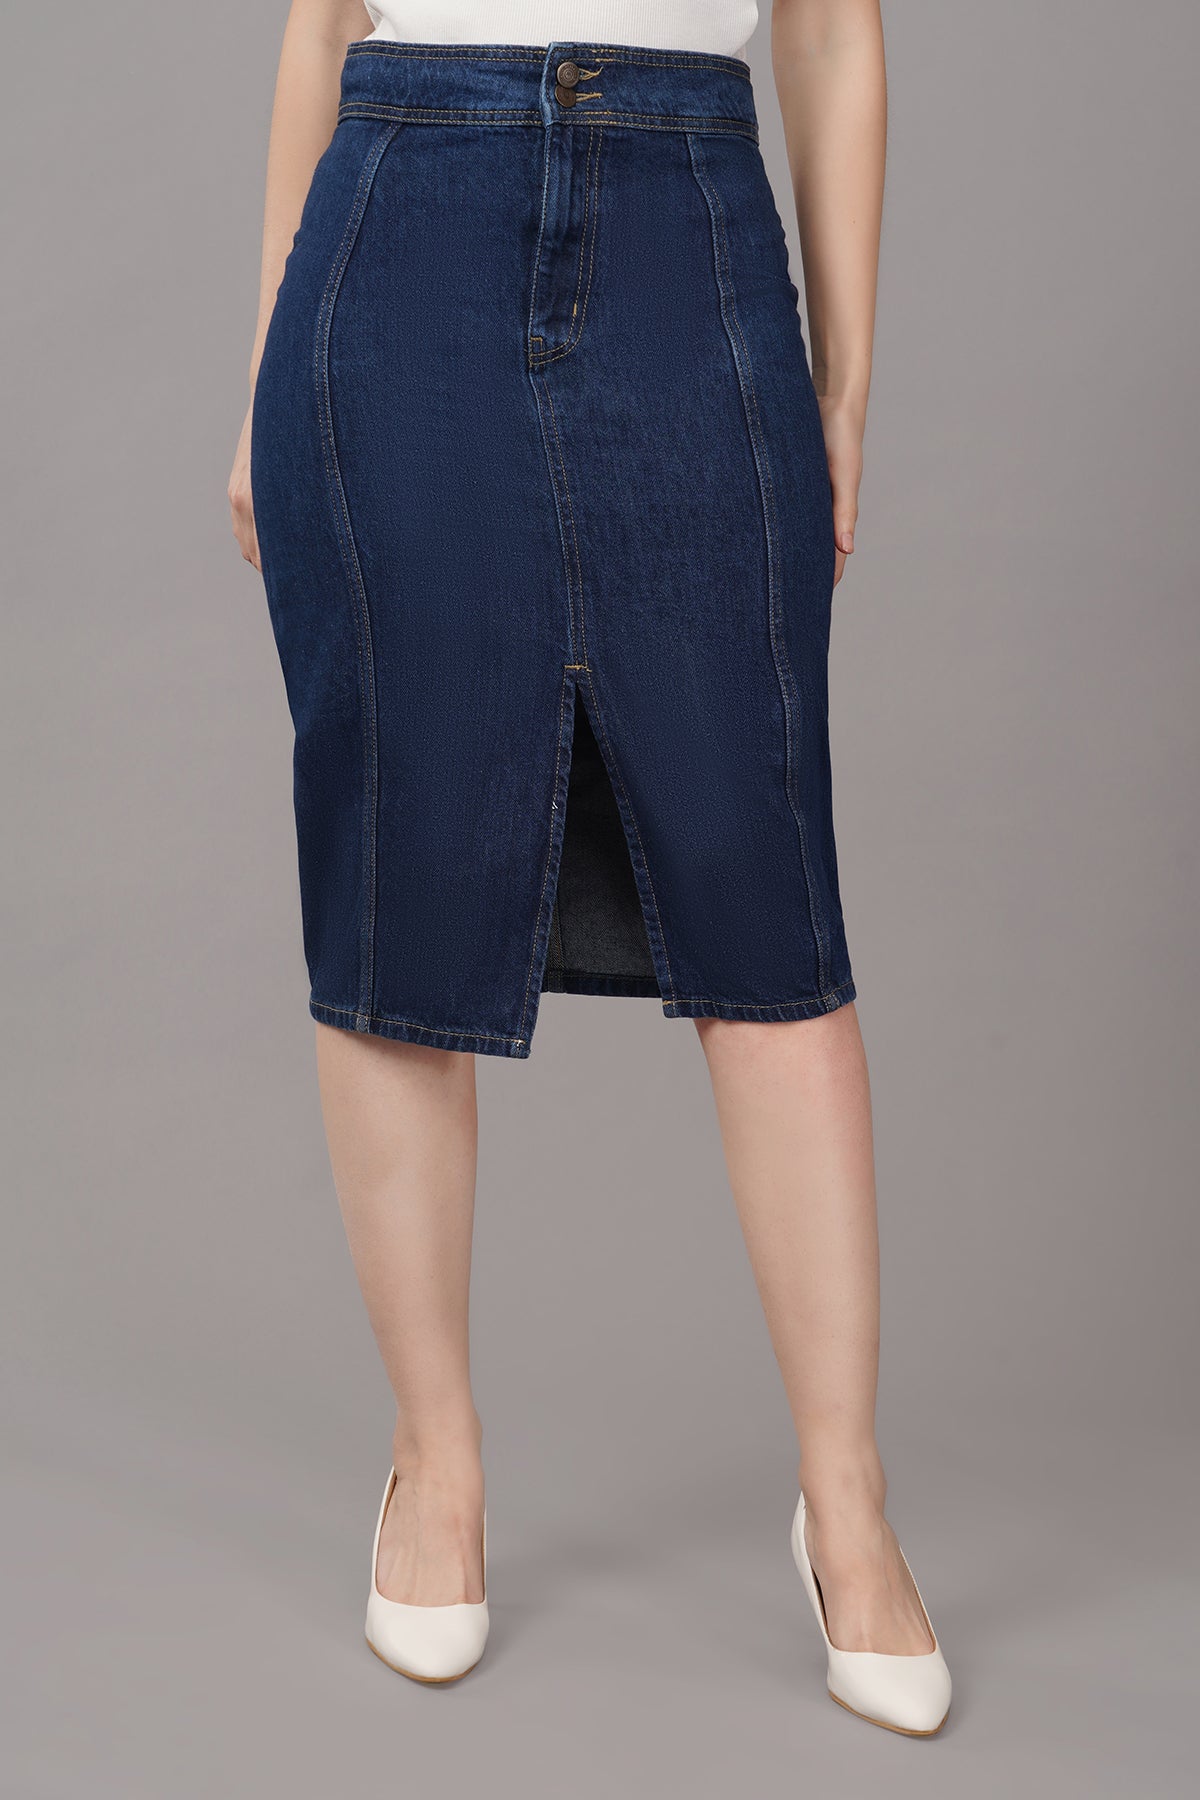 ASOS DESIGN denim high waist mini skirt in midwash blue | ASOS